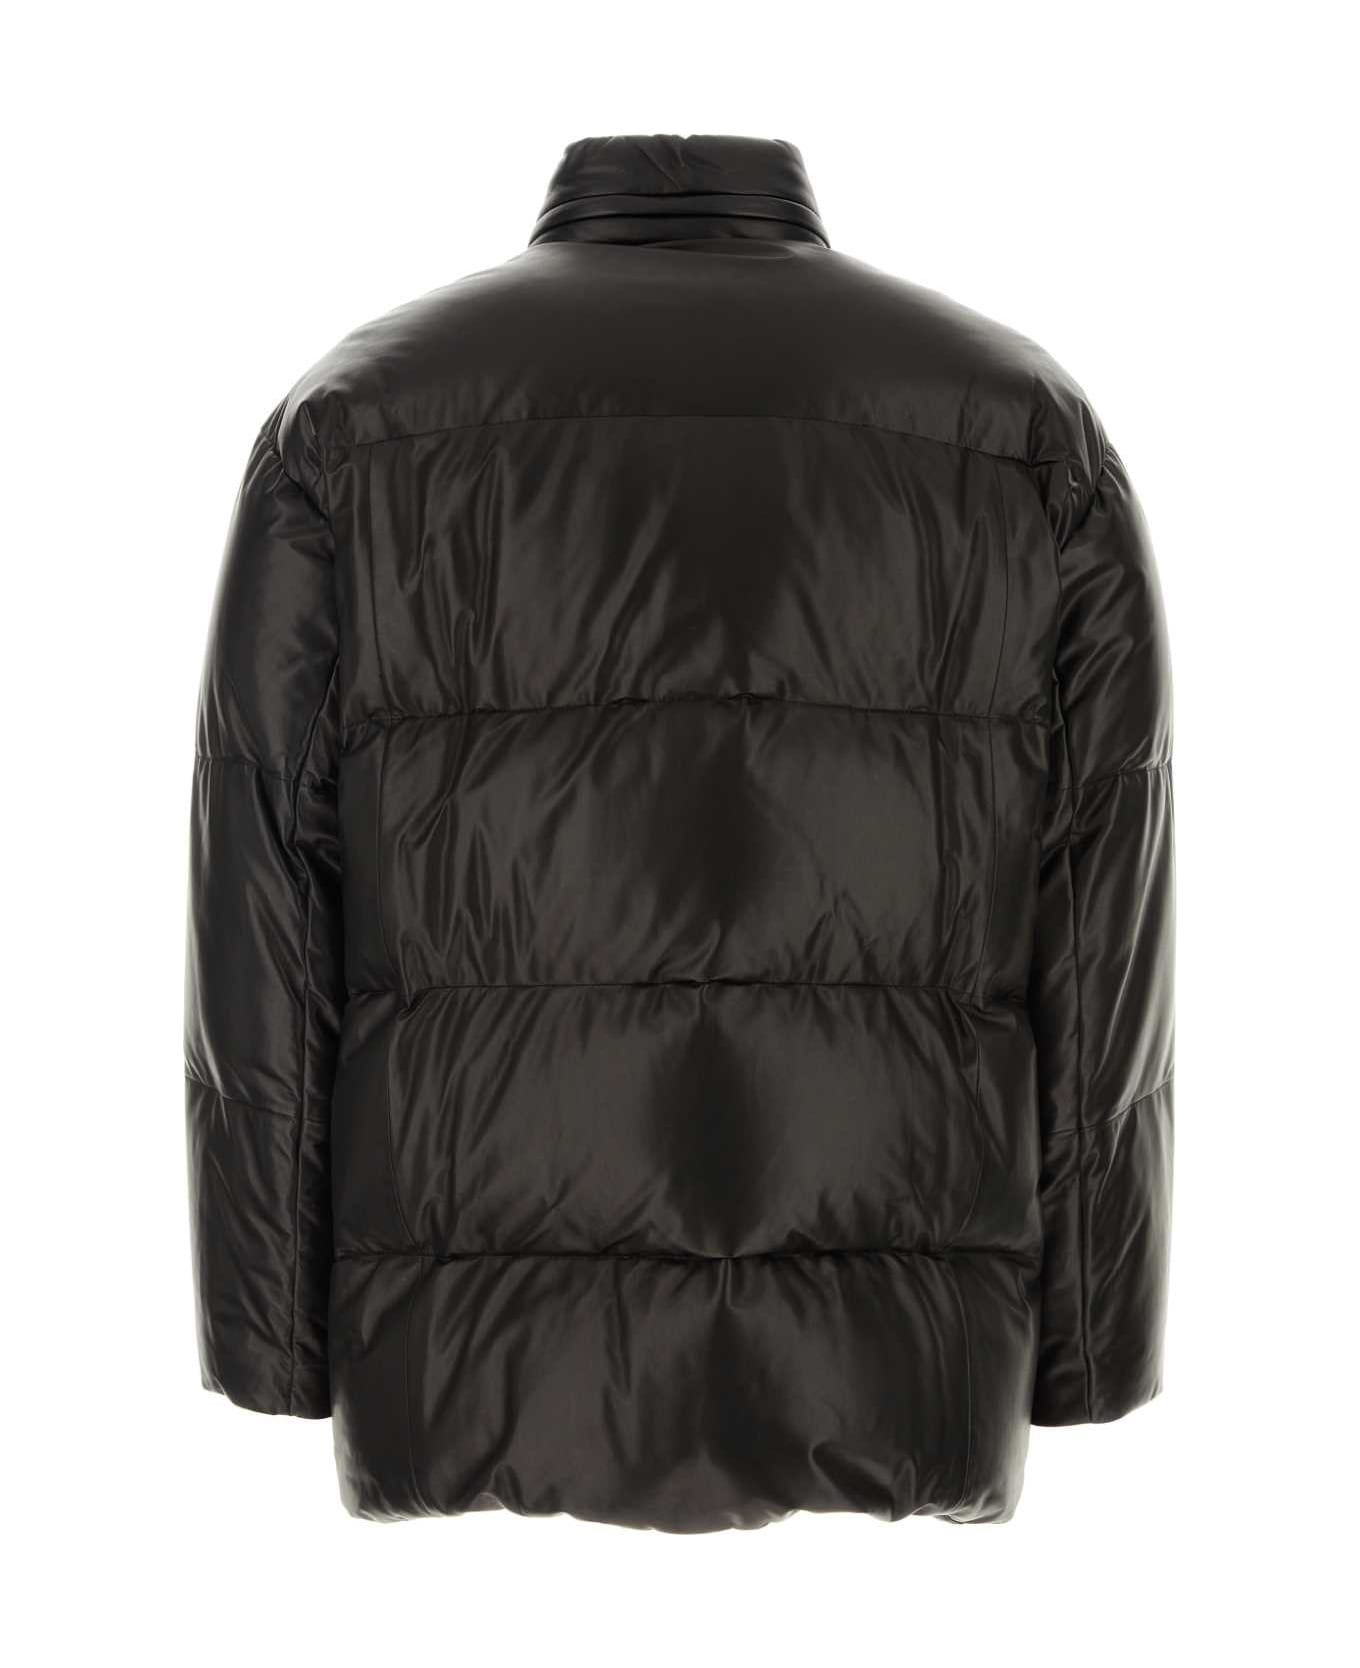 Prada Black Nappa Leather Down Jacket - NERO ダウンジャケット